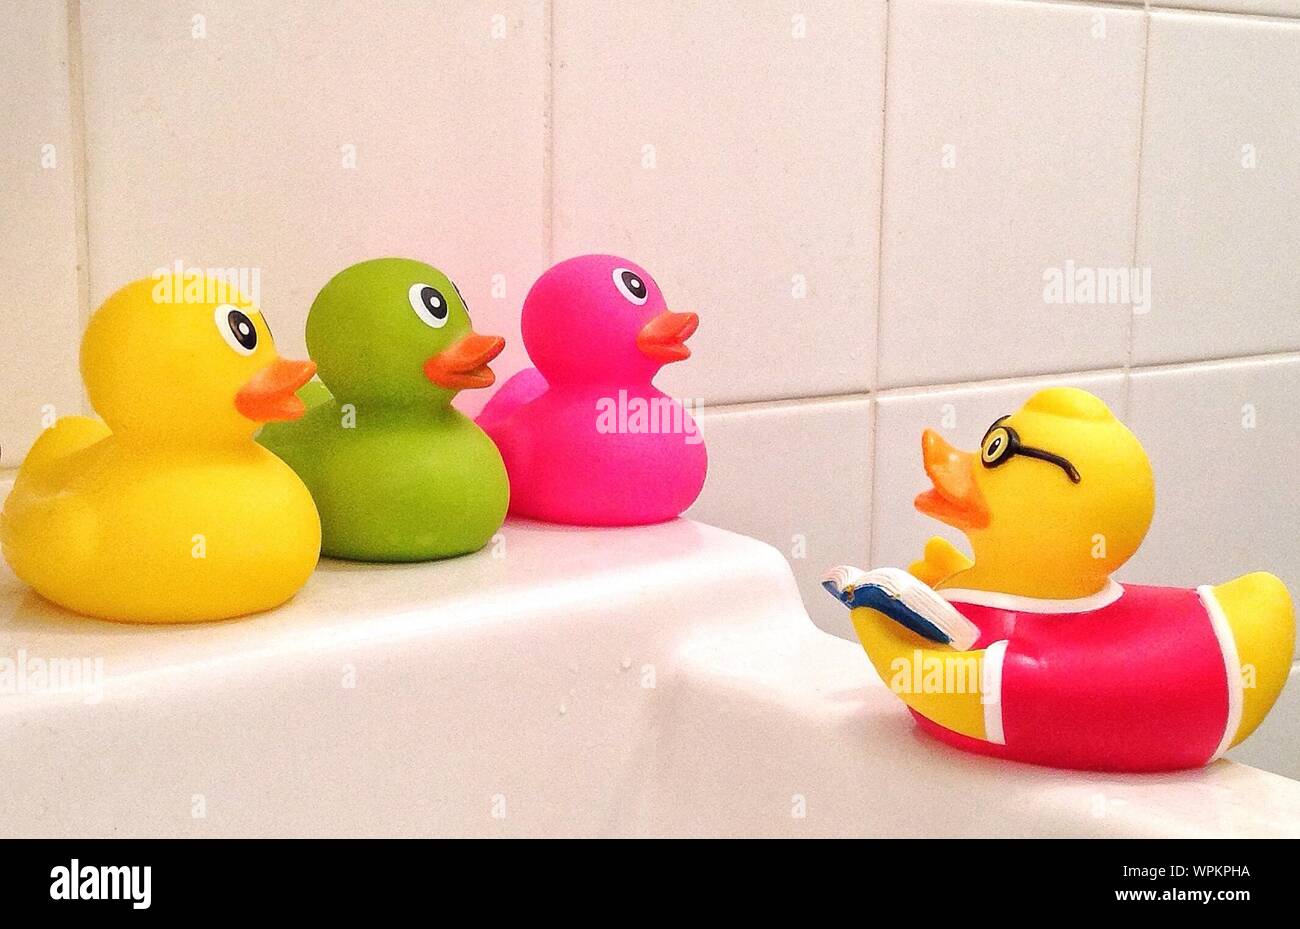 Rubber Ducks In Bathroom Stock Photo